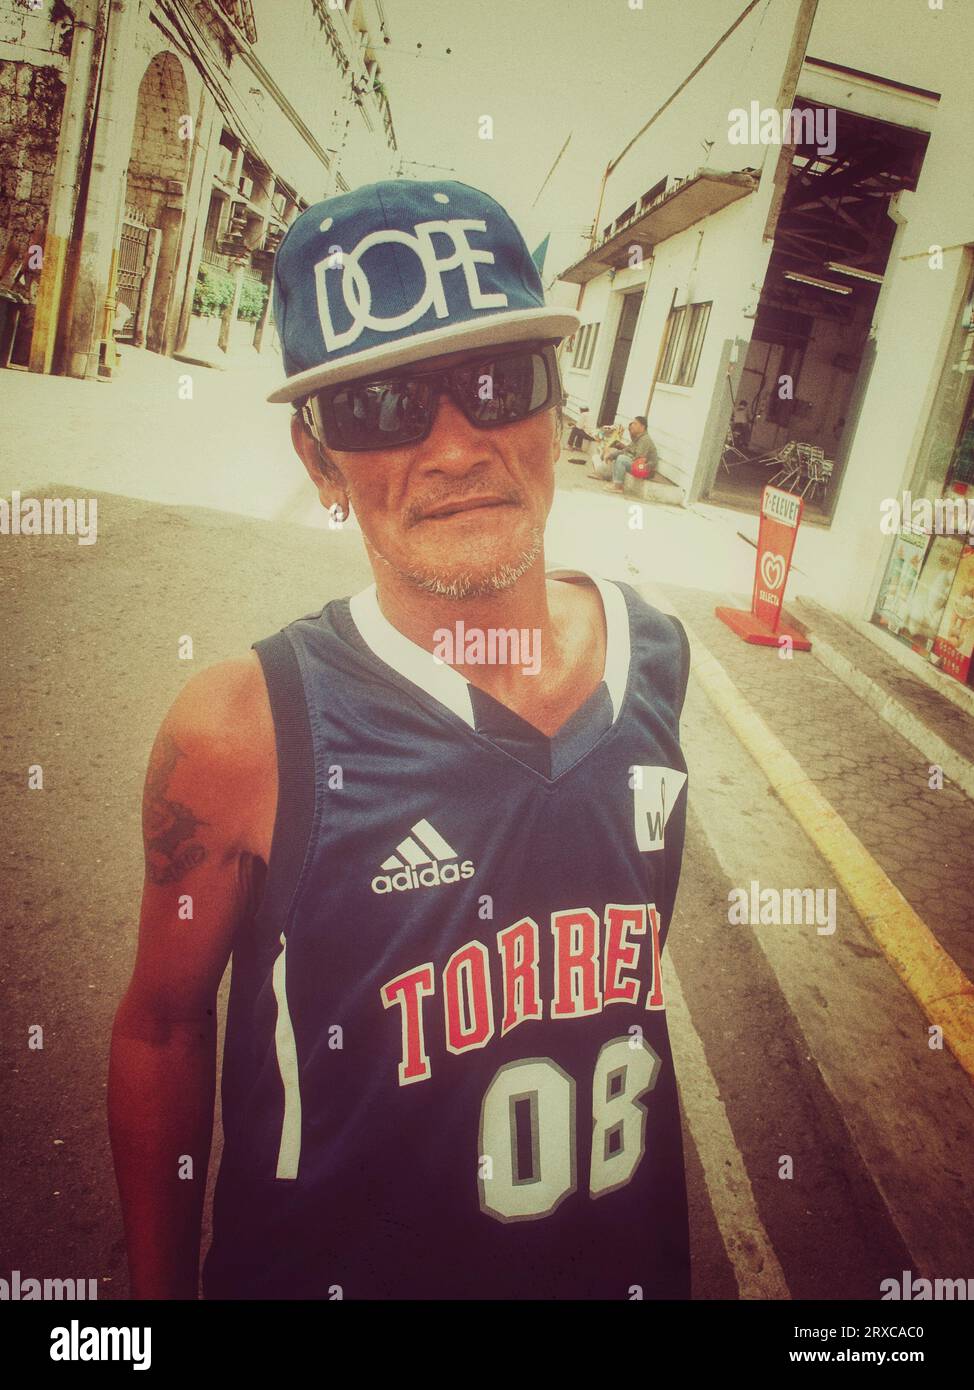 Cebu city, Philippines - September 28, 2013: Portrait of senior adult Filipino man wearing basketball shirt, baseball hat, tattooed, sunglasses. Stree Stock Photo